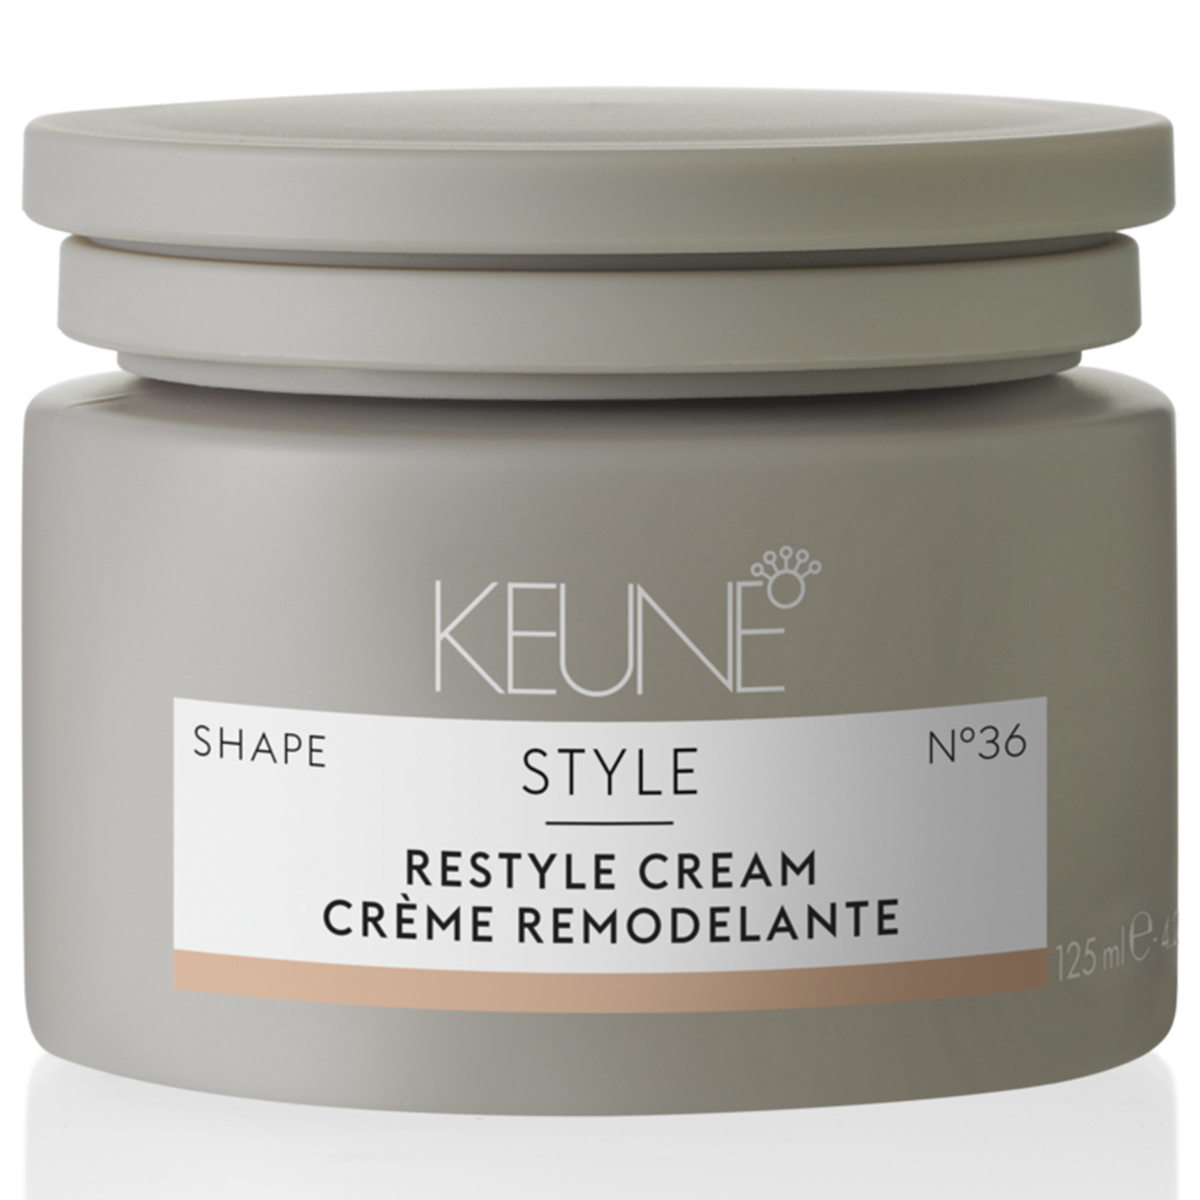 Keune Крем для рестайлинга Restyle Cream №36, 125 мл (Keune, Style)